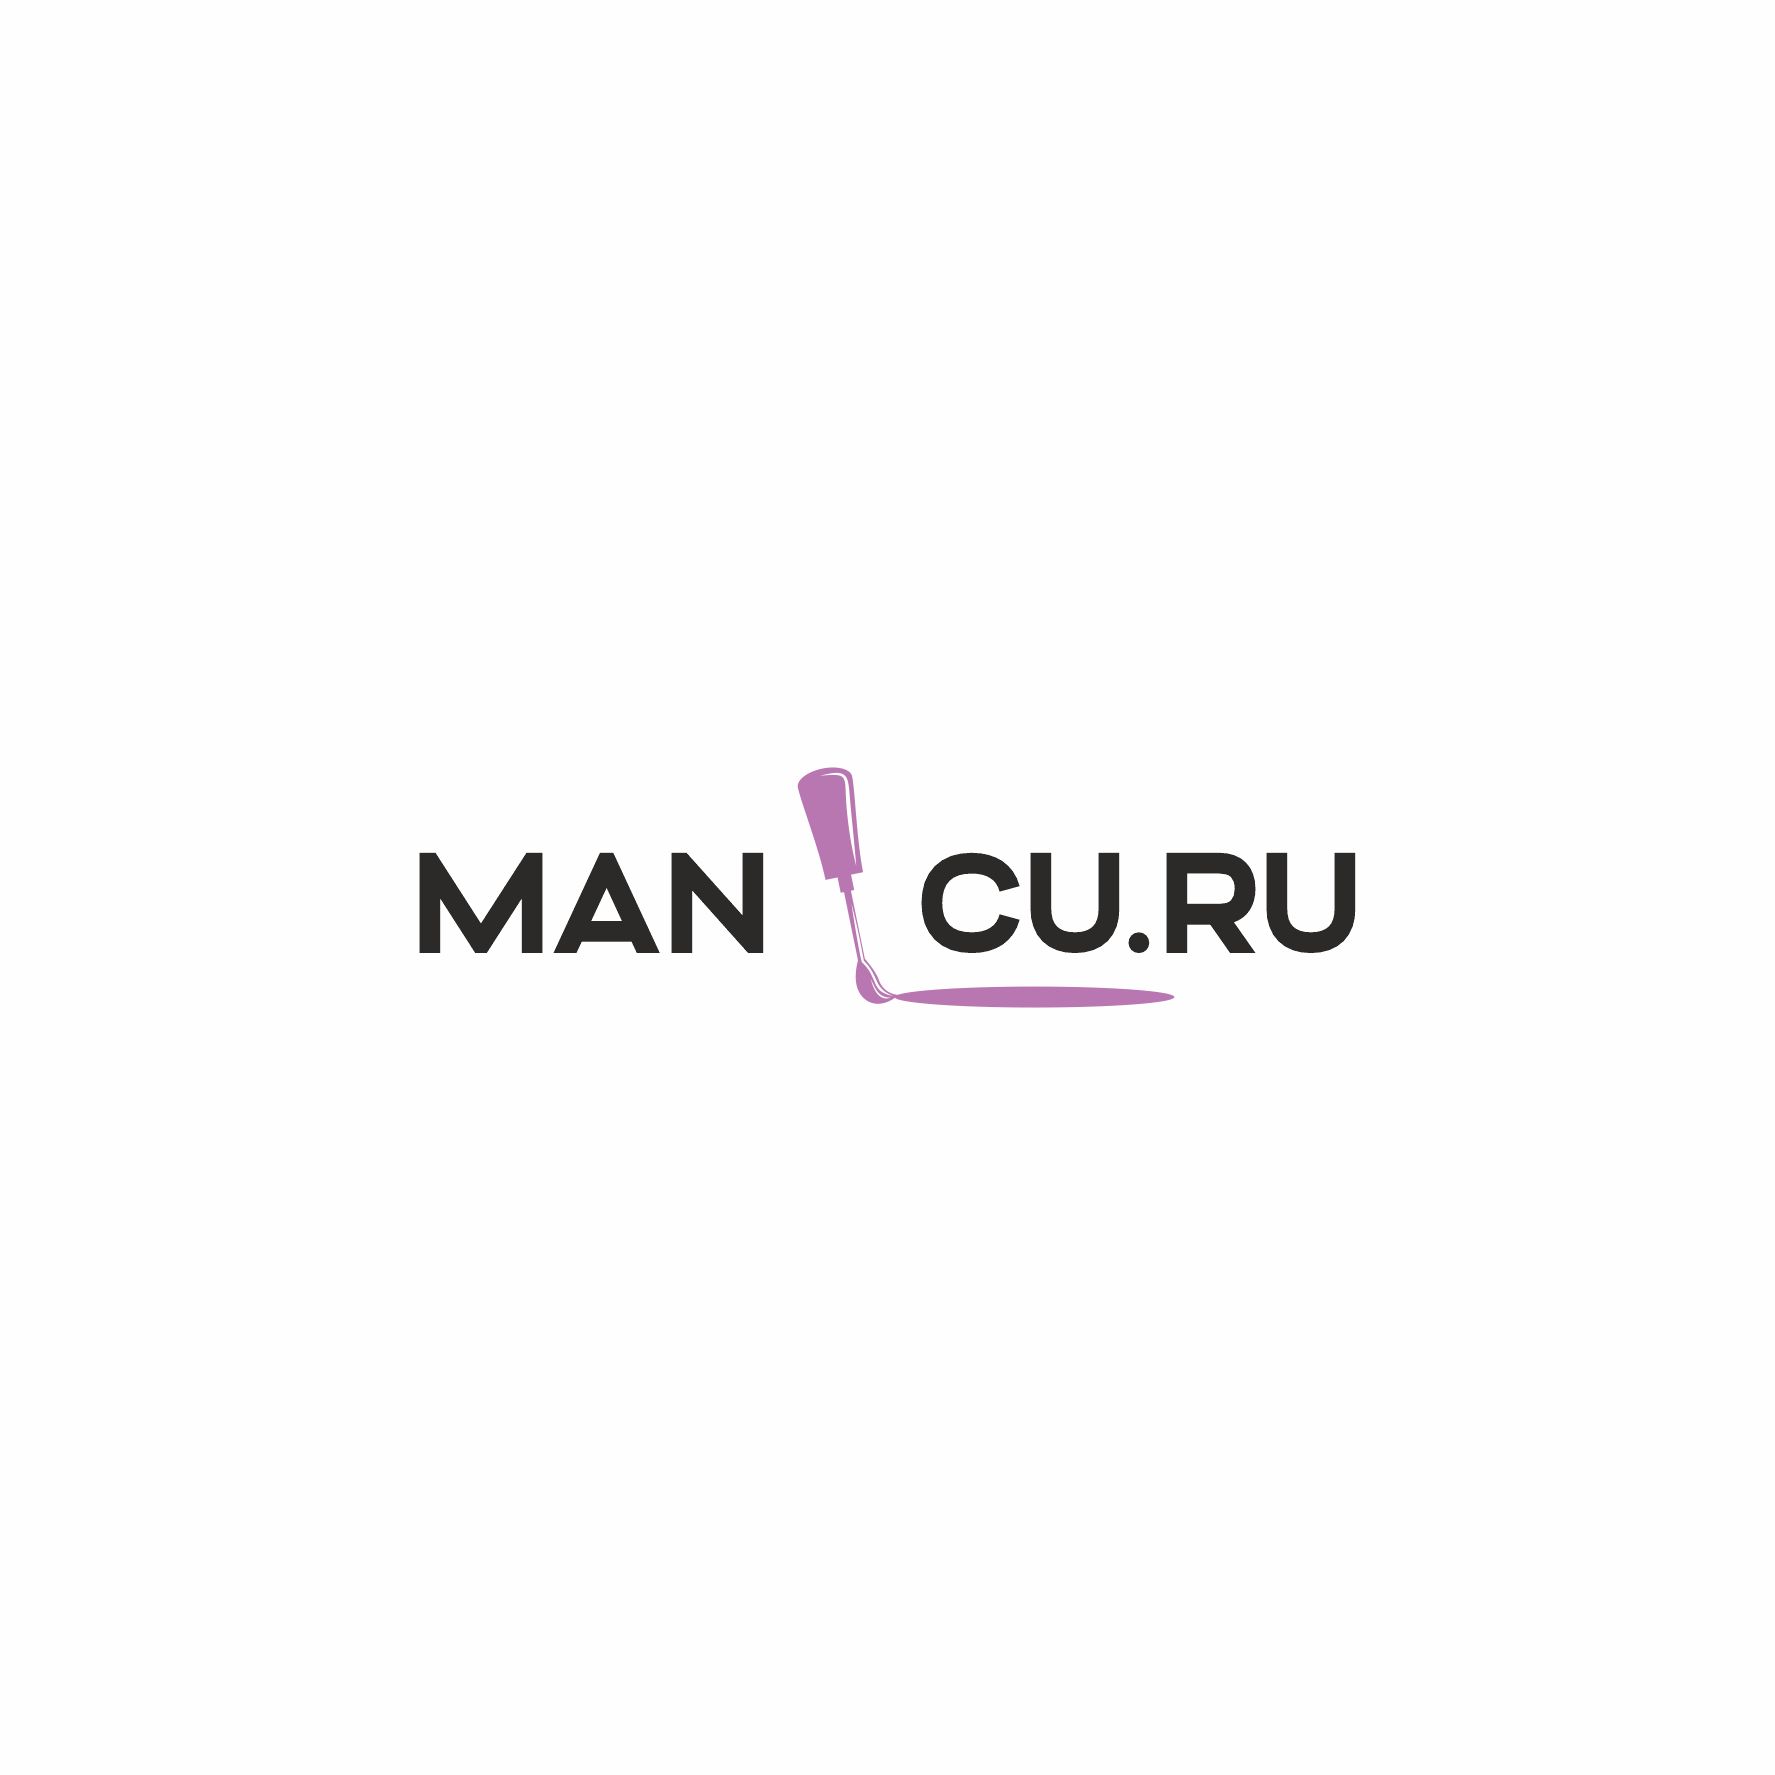 Логотип для manicu.ru , ребрендинг Маникю - дизайнер ilim1973